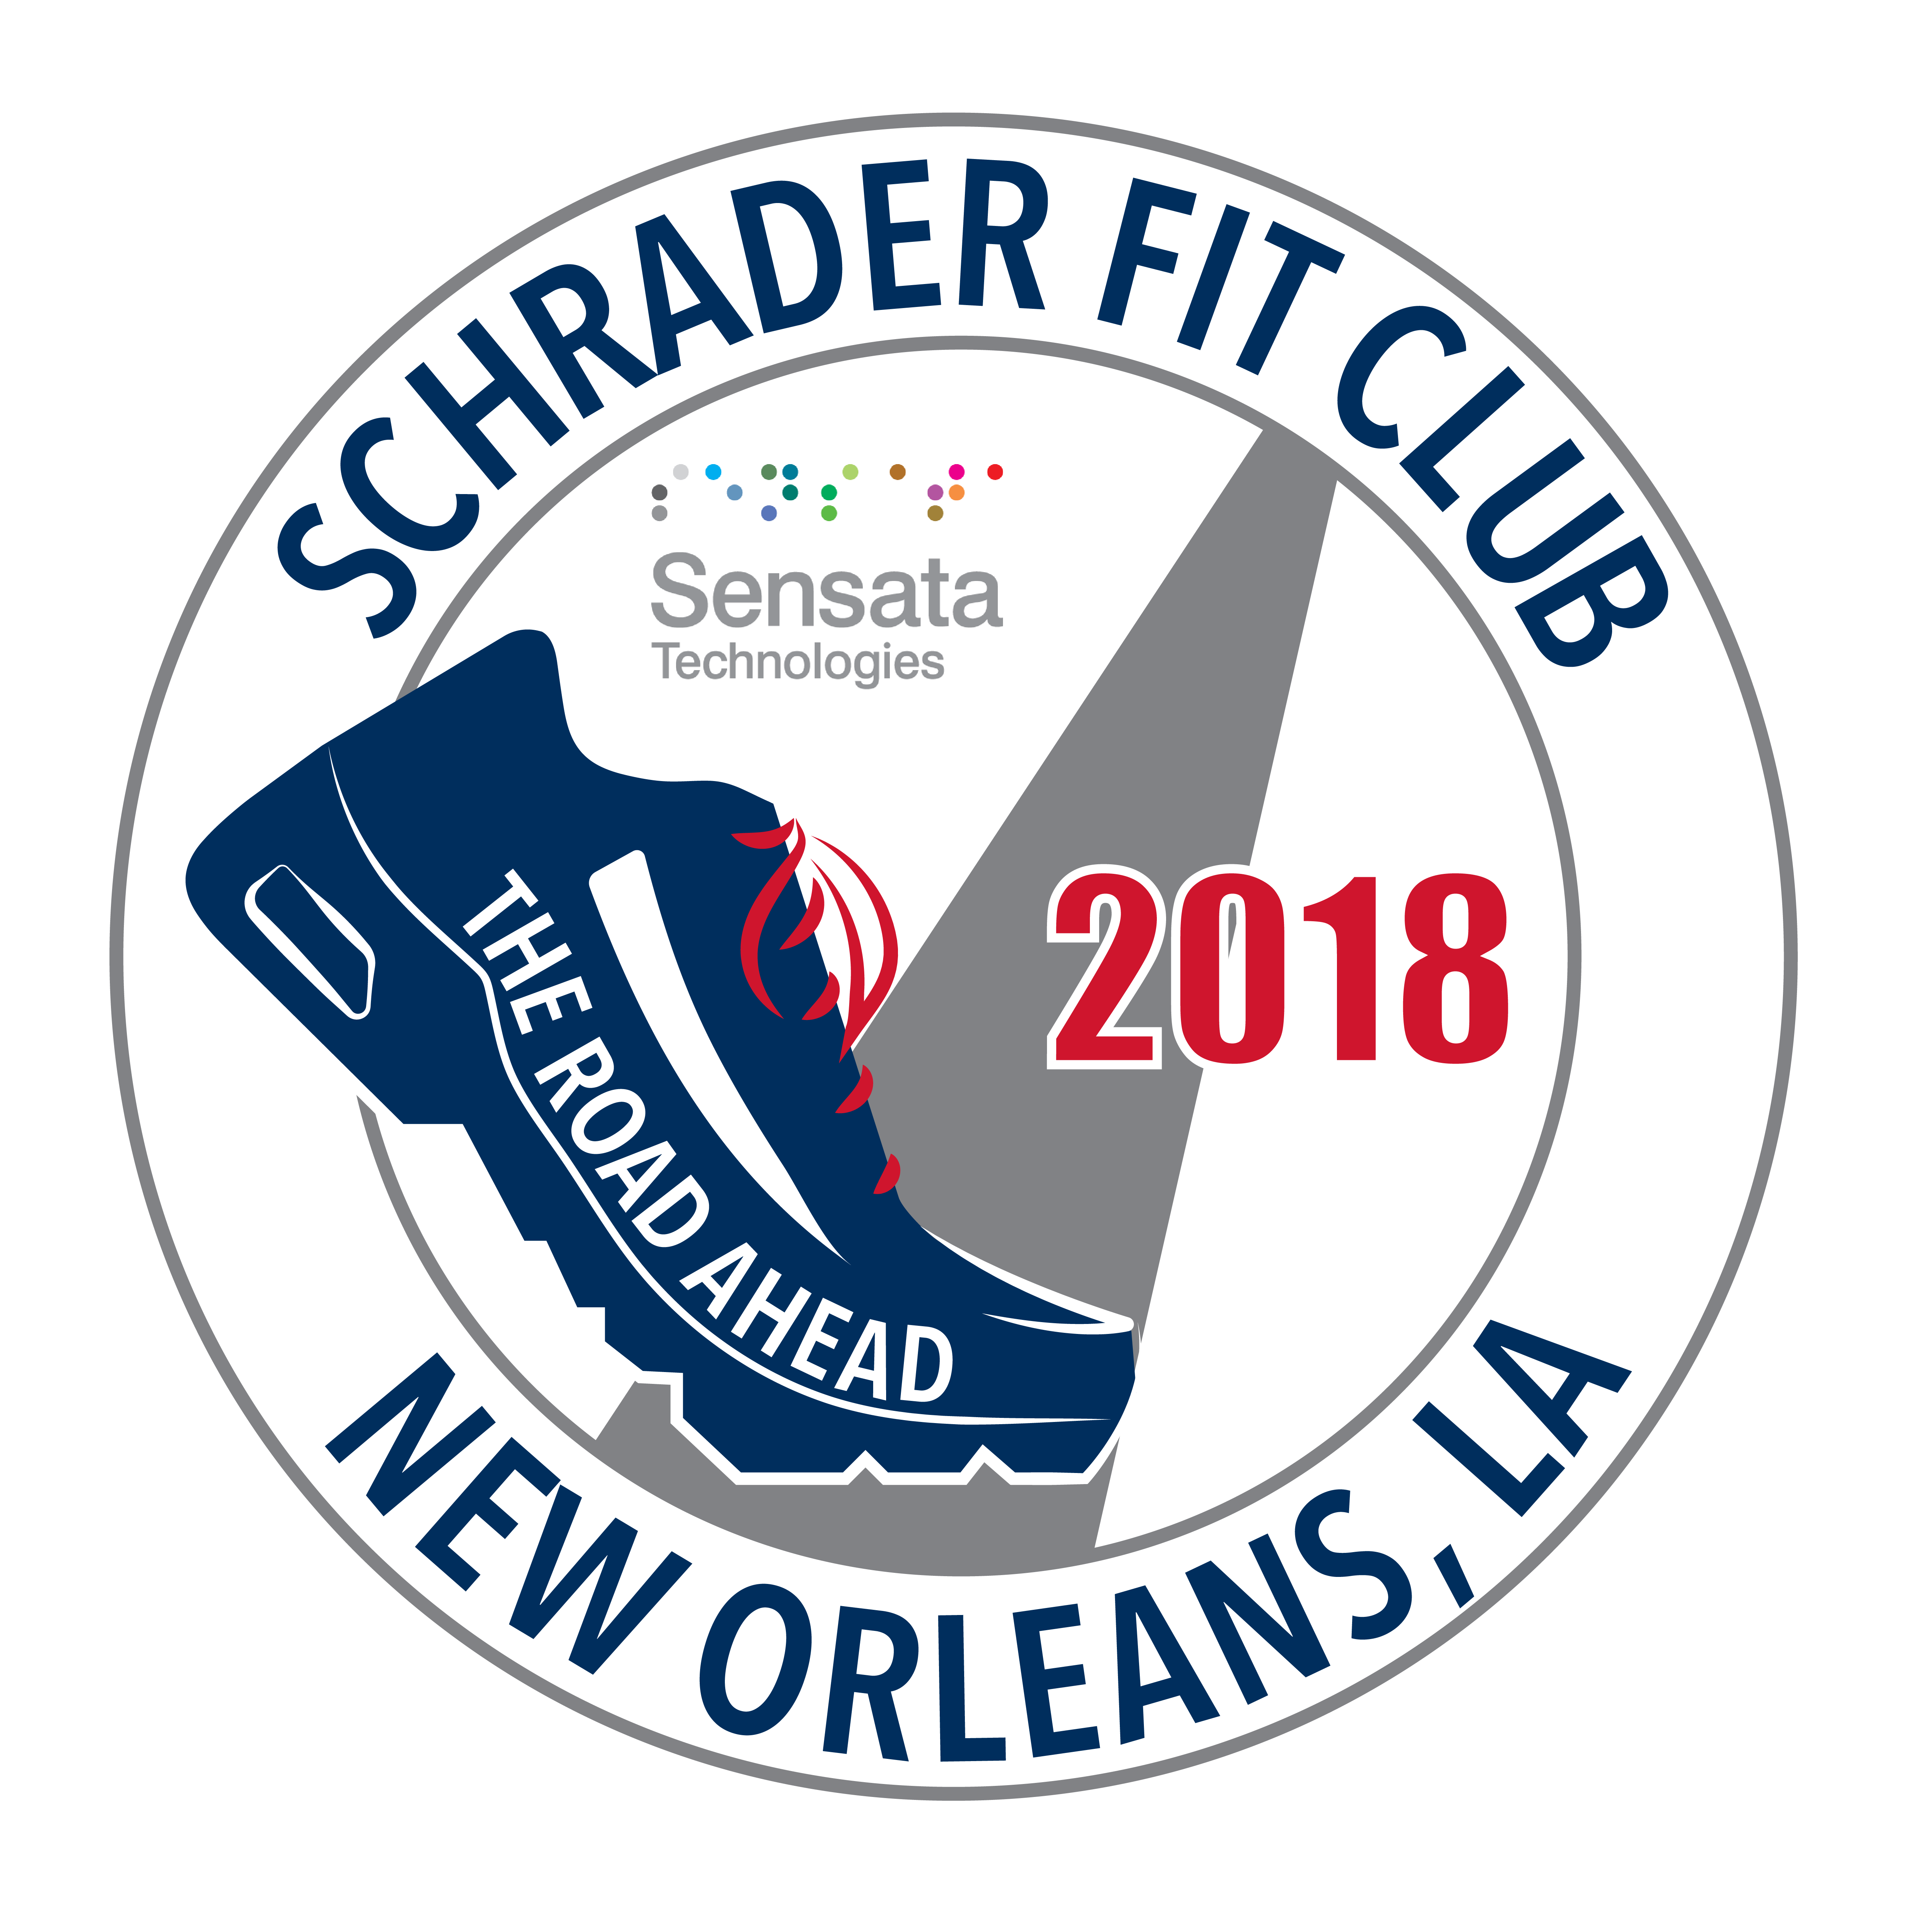 Логотип Schrader Fit Club